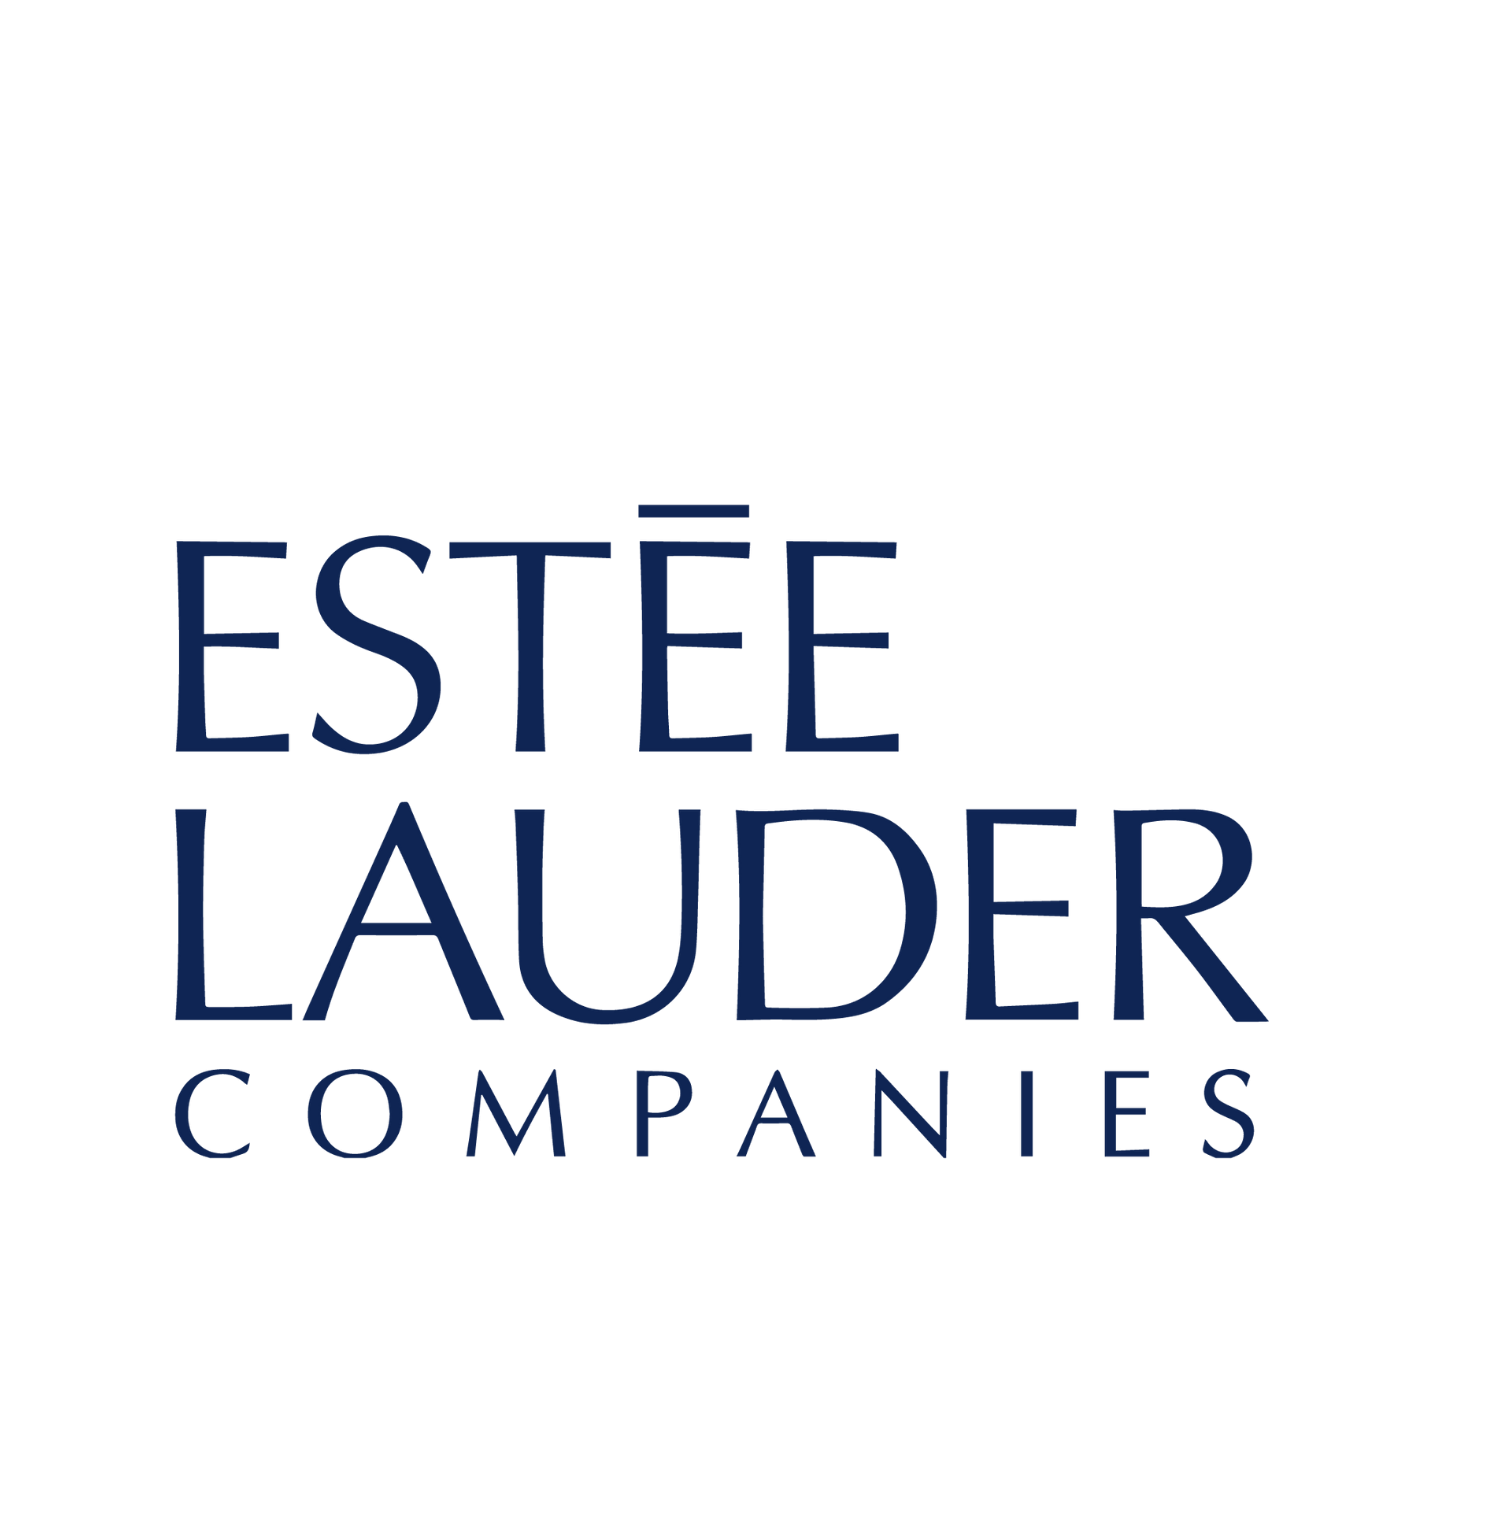 The Estée Lauder Companies is a Campus Forward Award Winner